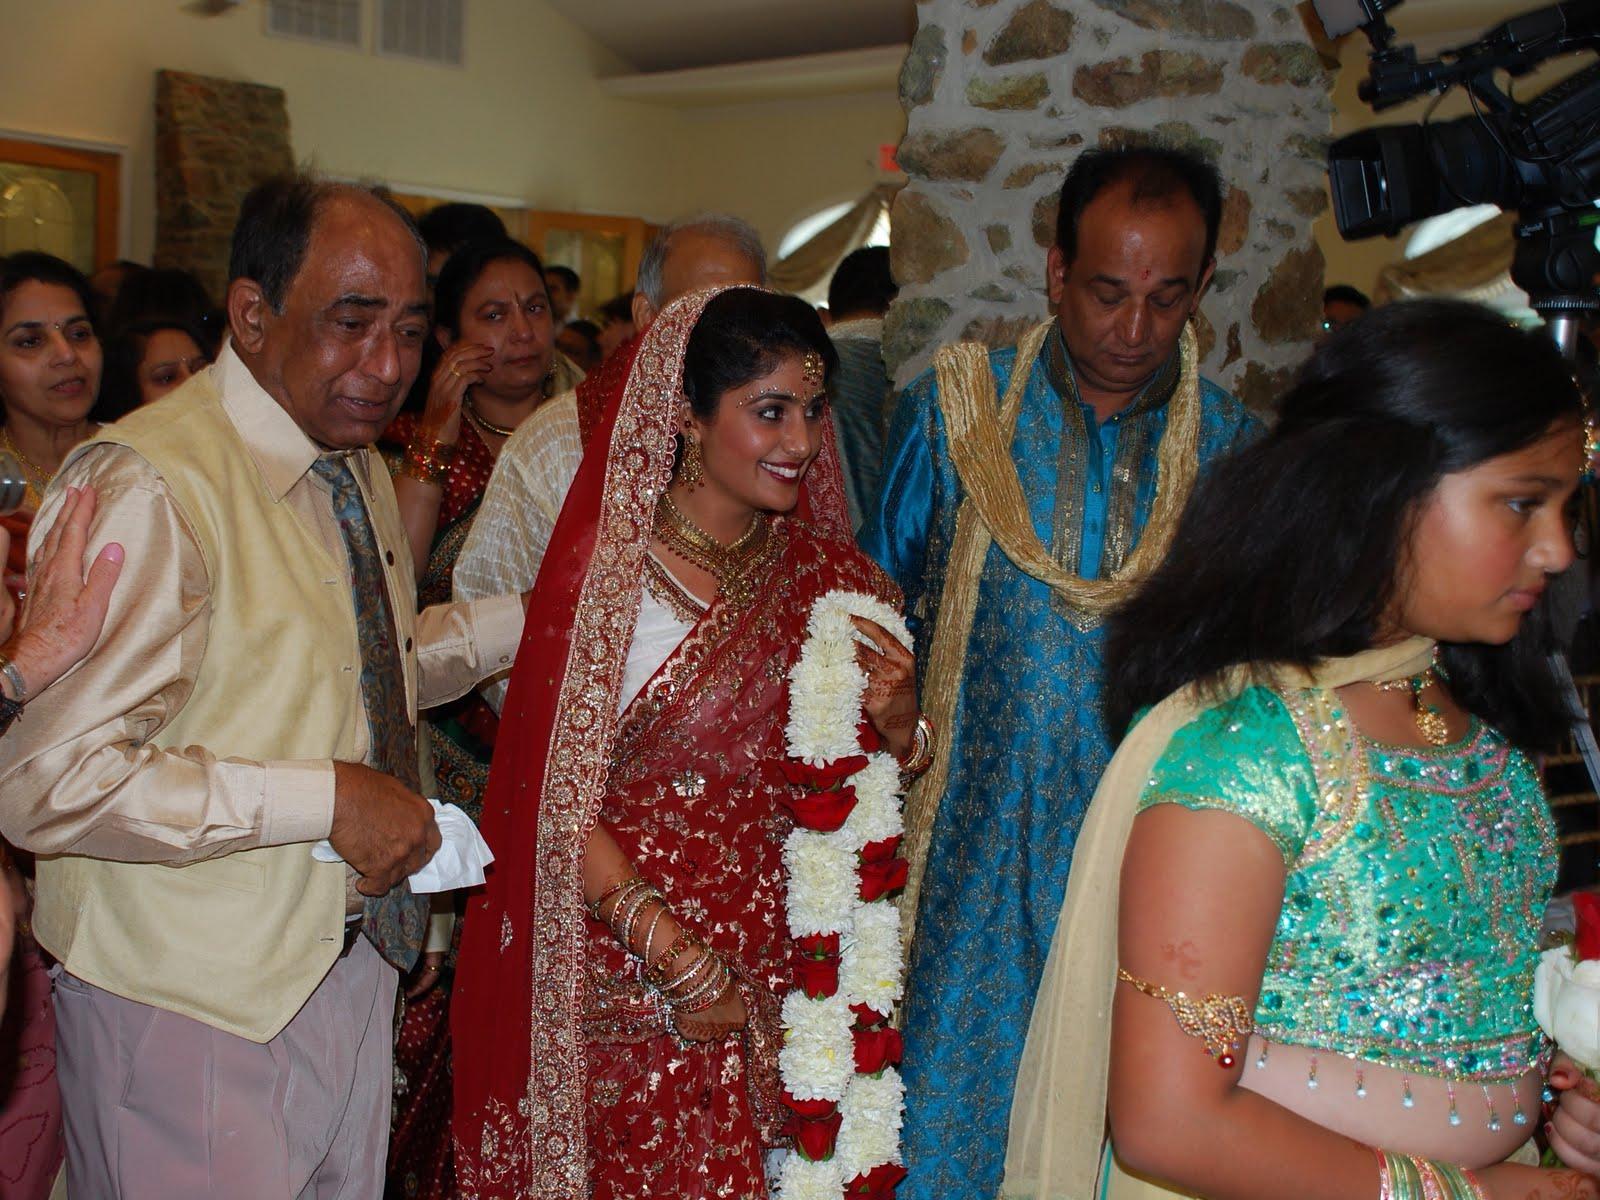 TRADITIONAL INDIAN WEDDING